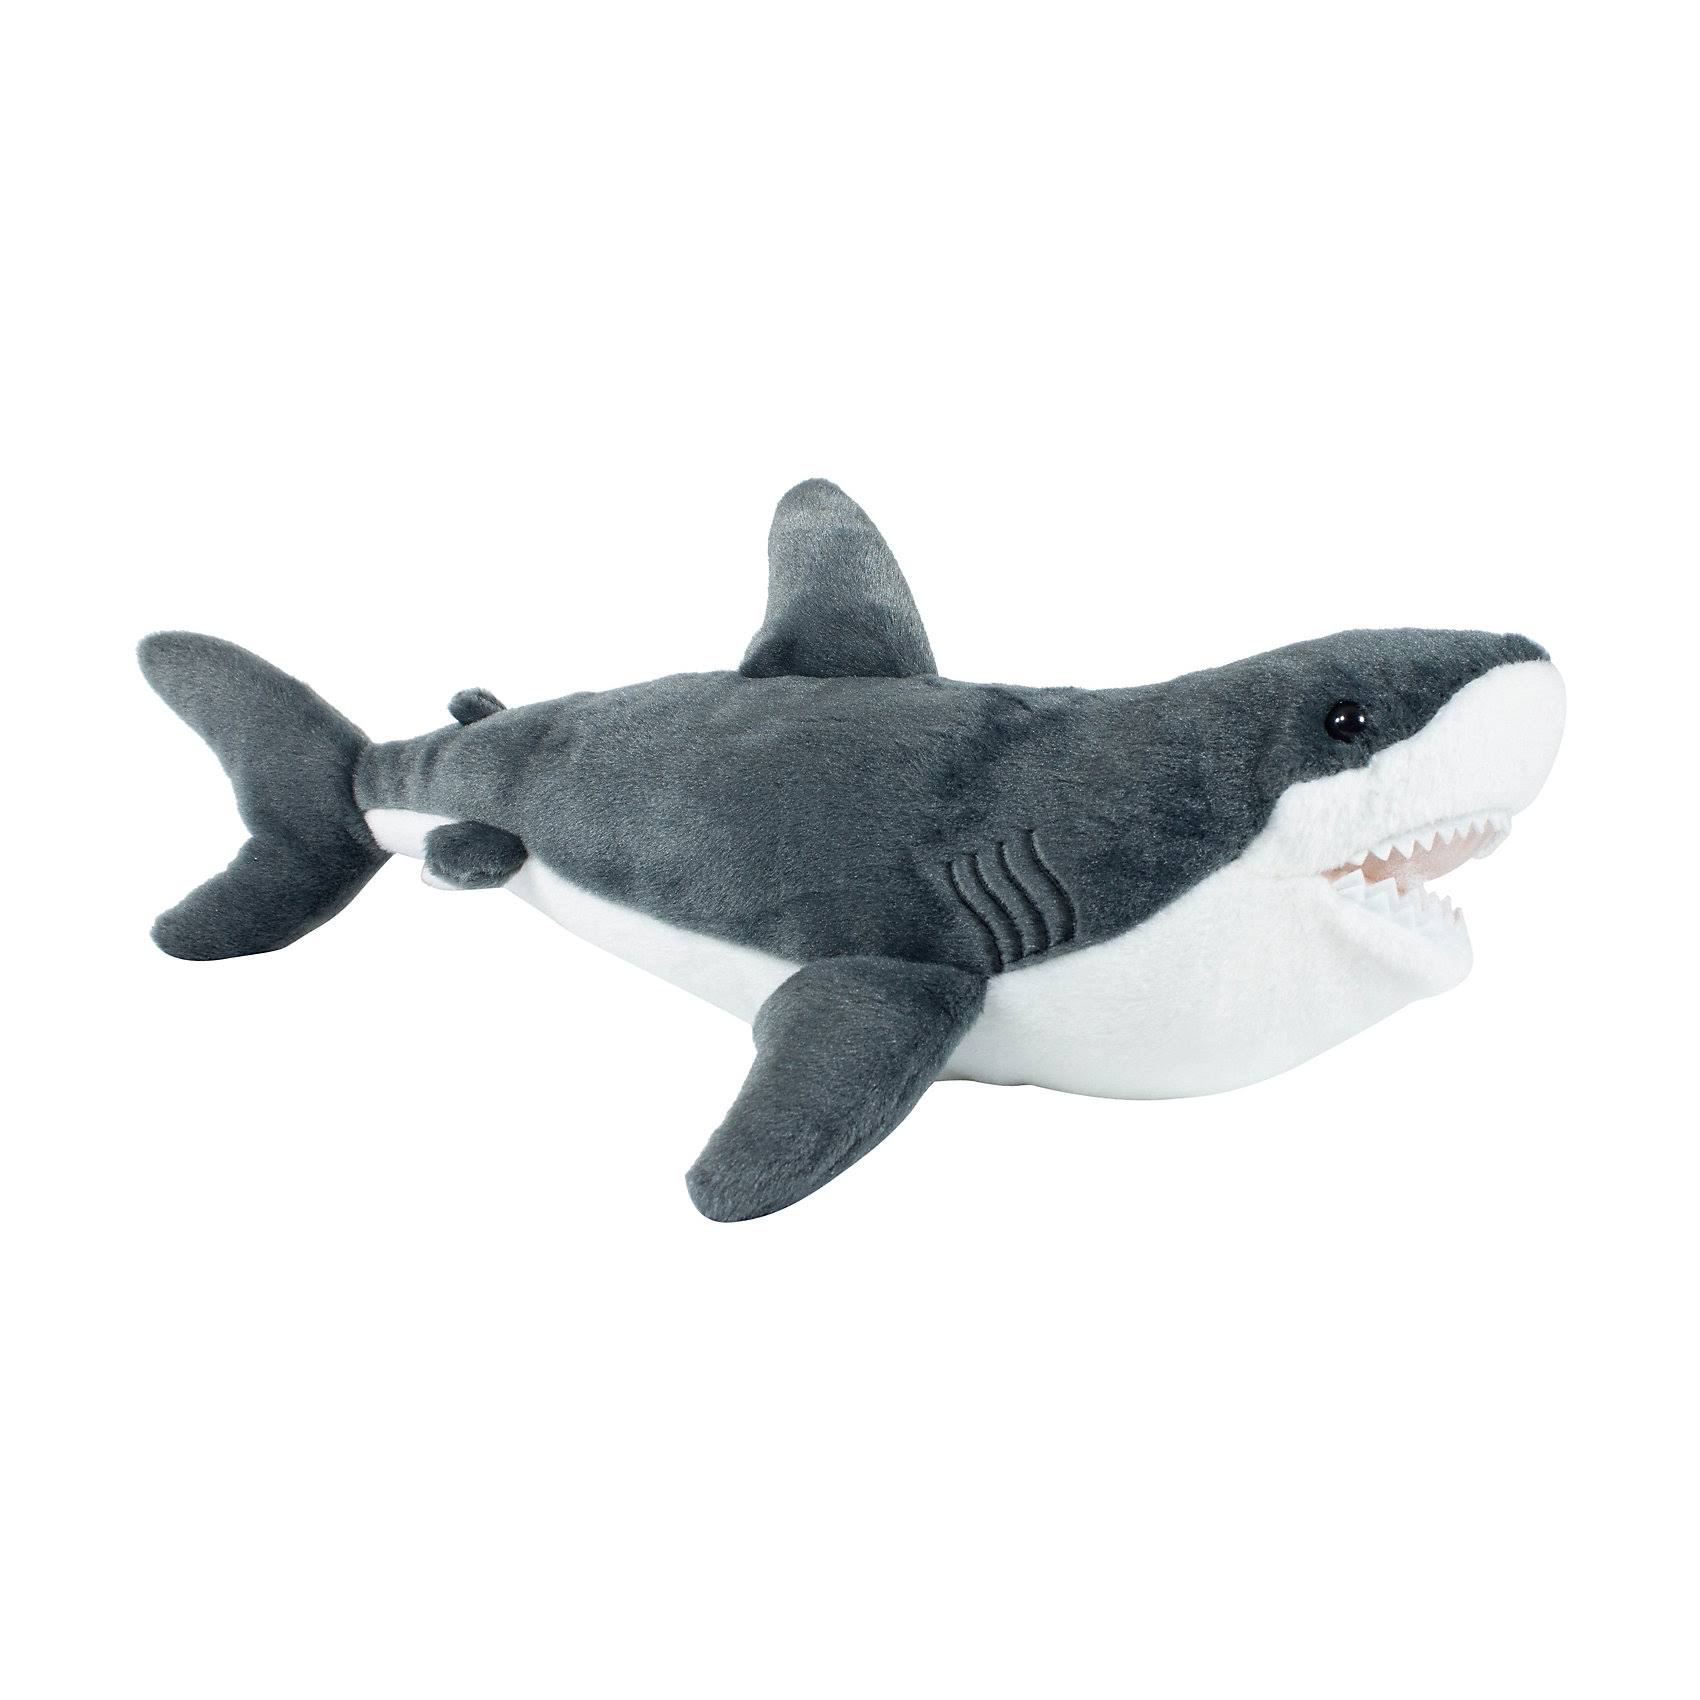 Wild Republic Cuddlekins Great Shark Cuddly Plush Toy - 54cm, White and Gray